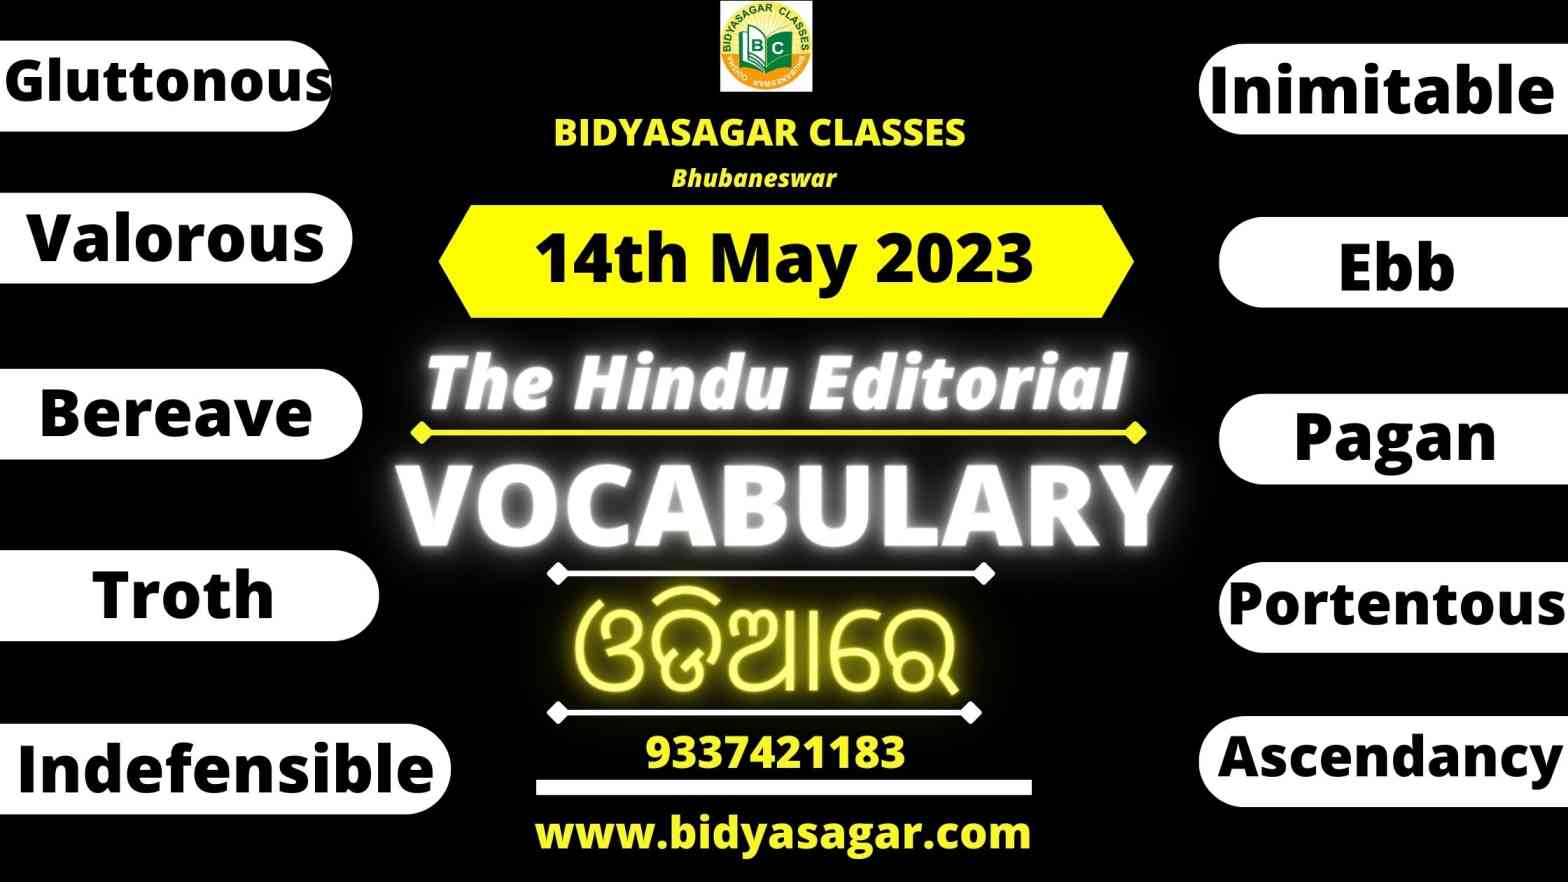 The Hindu Editorial Vocabulary of 14th May 2023